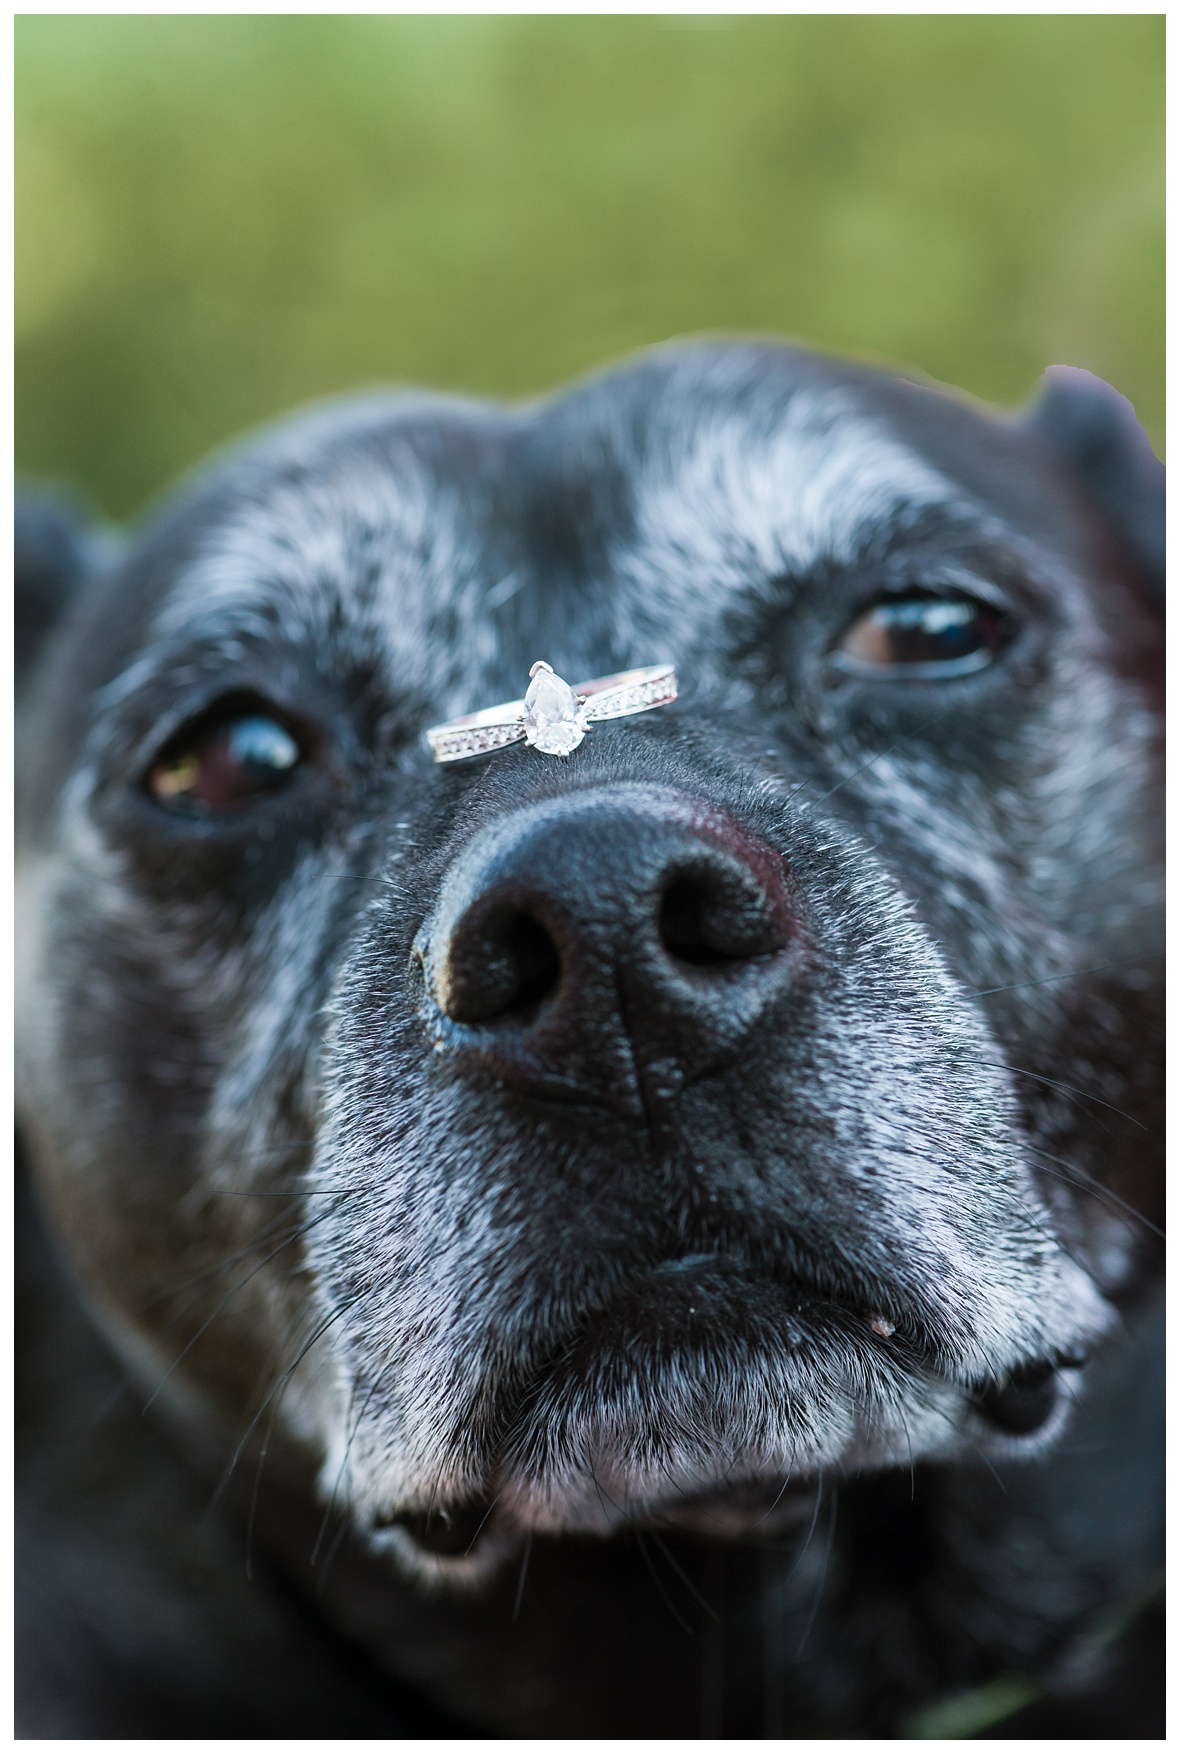 ring on senior dog nose